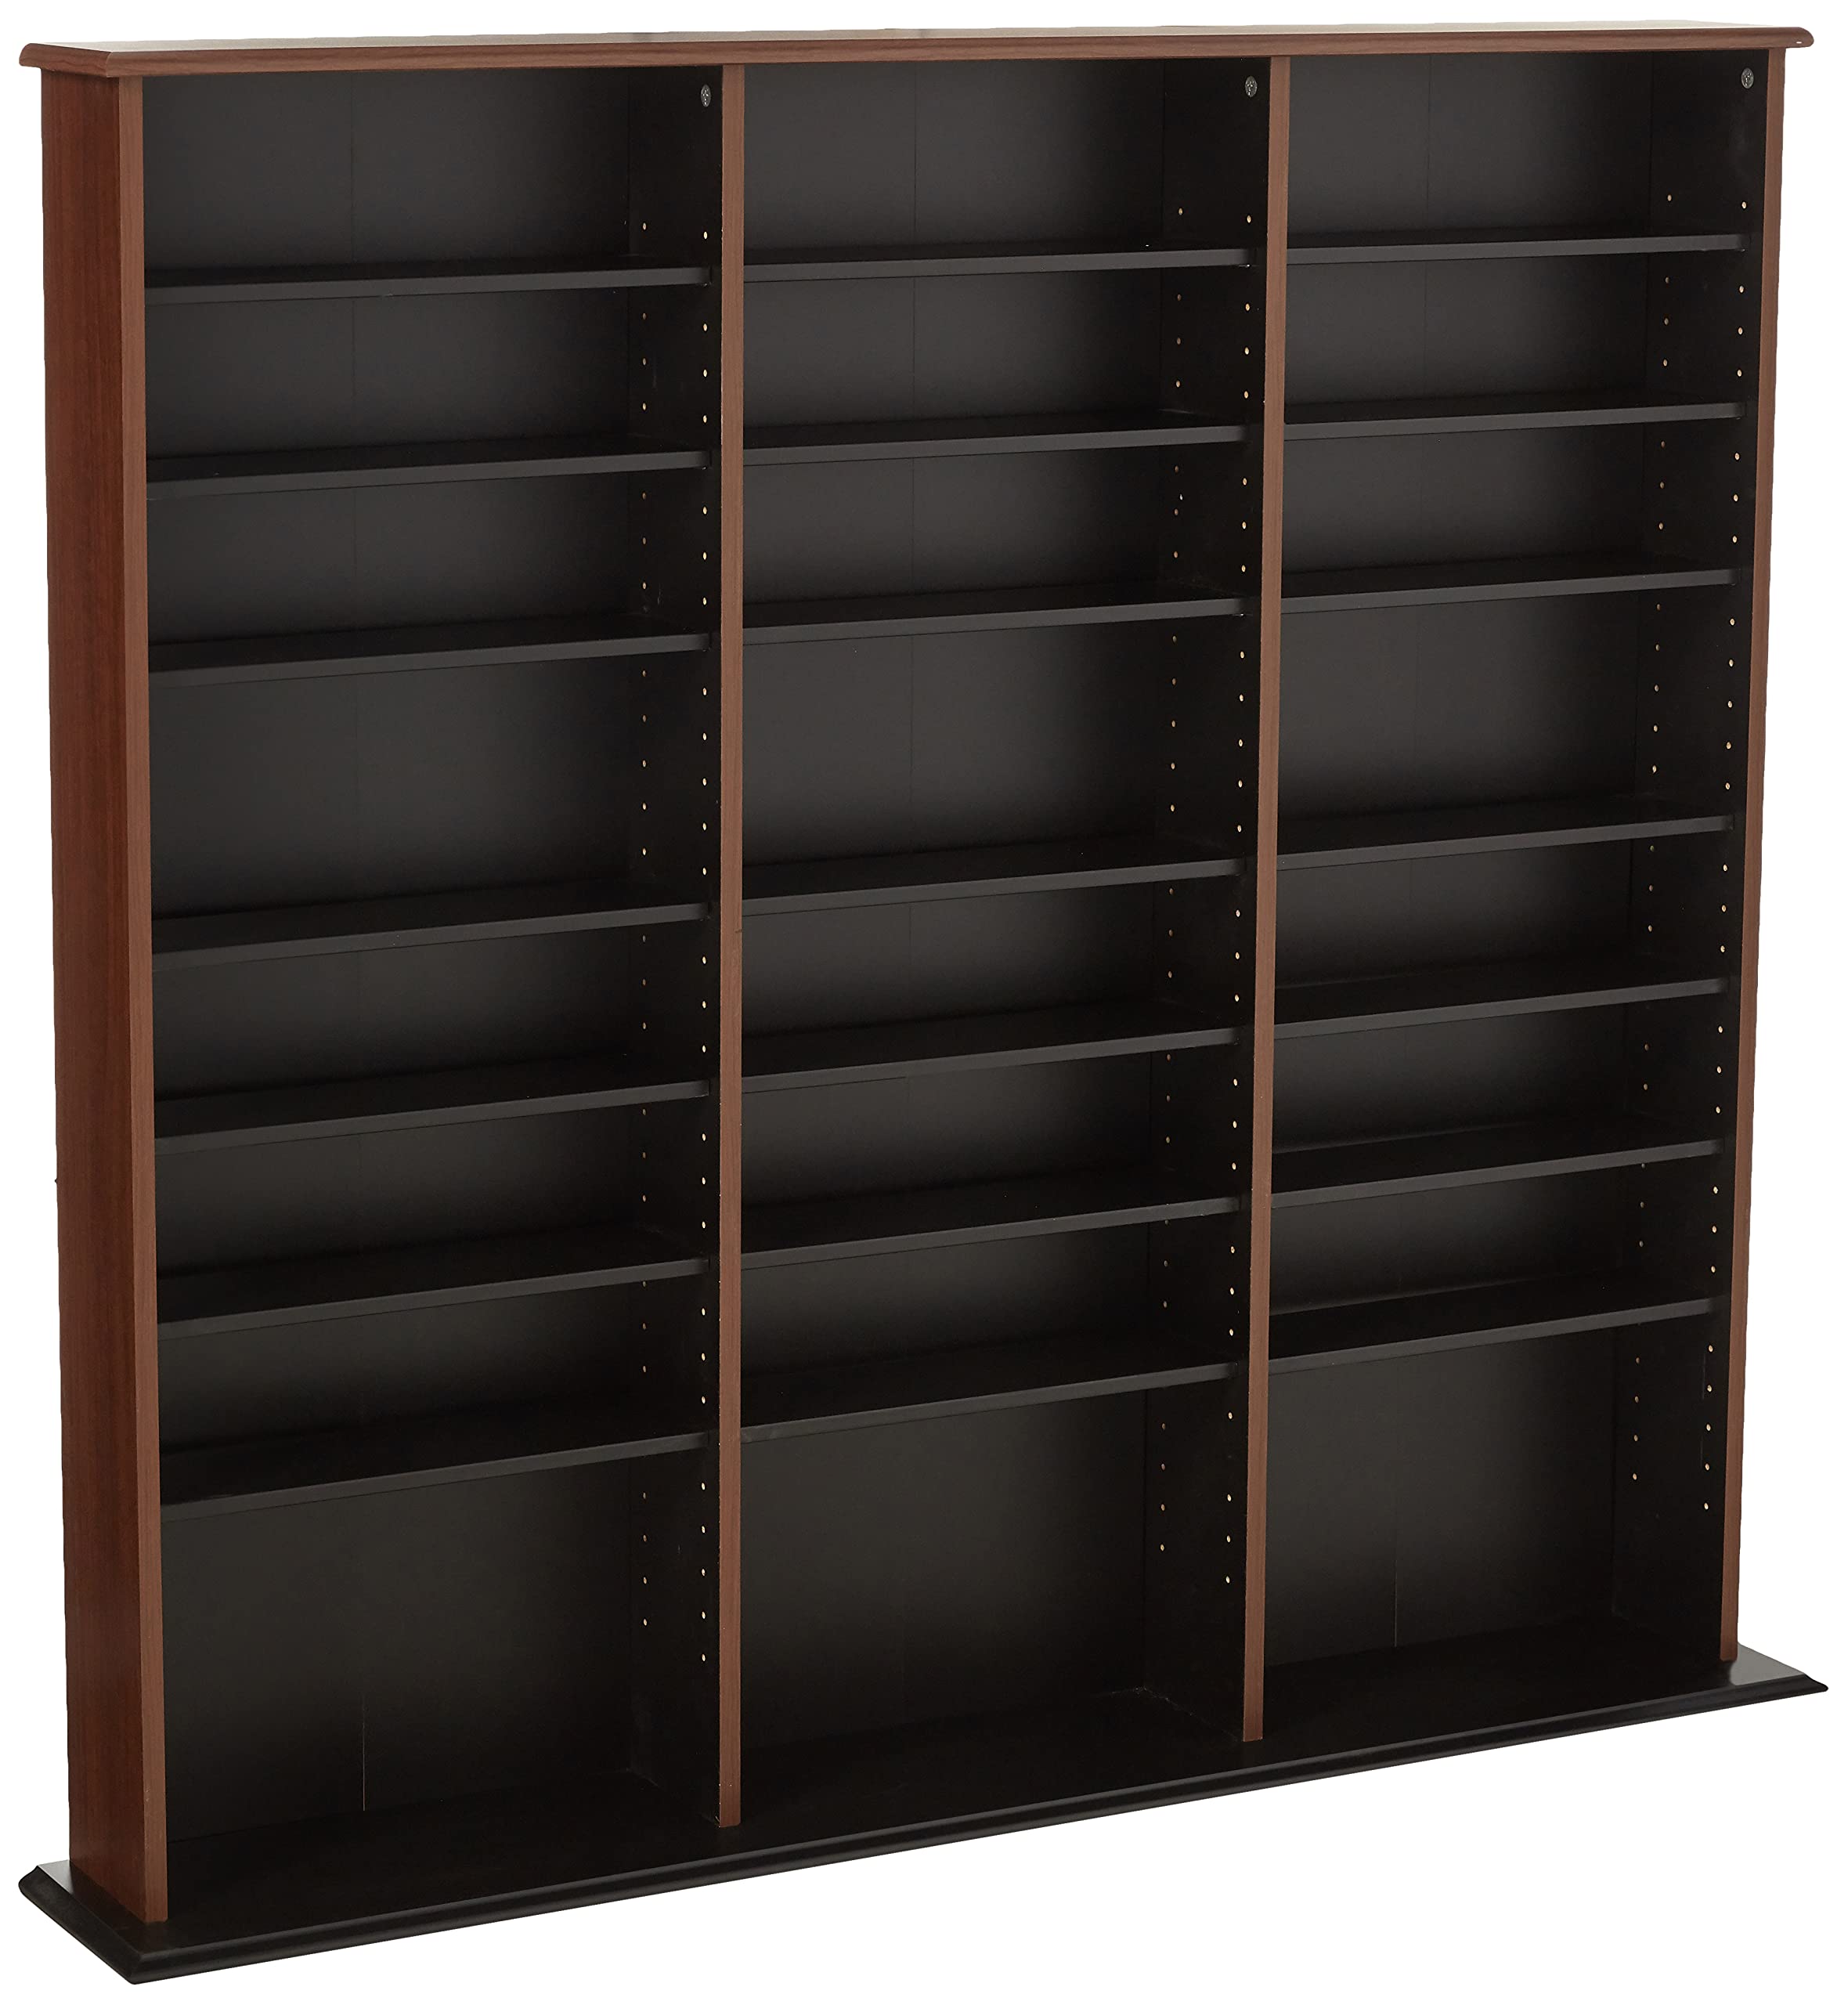 Prepac Triple Width Wall Storage Cabinet, Cherry and Black